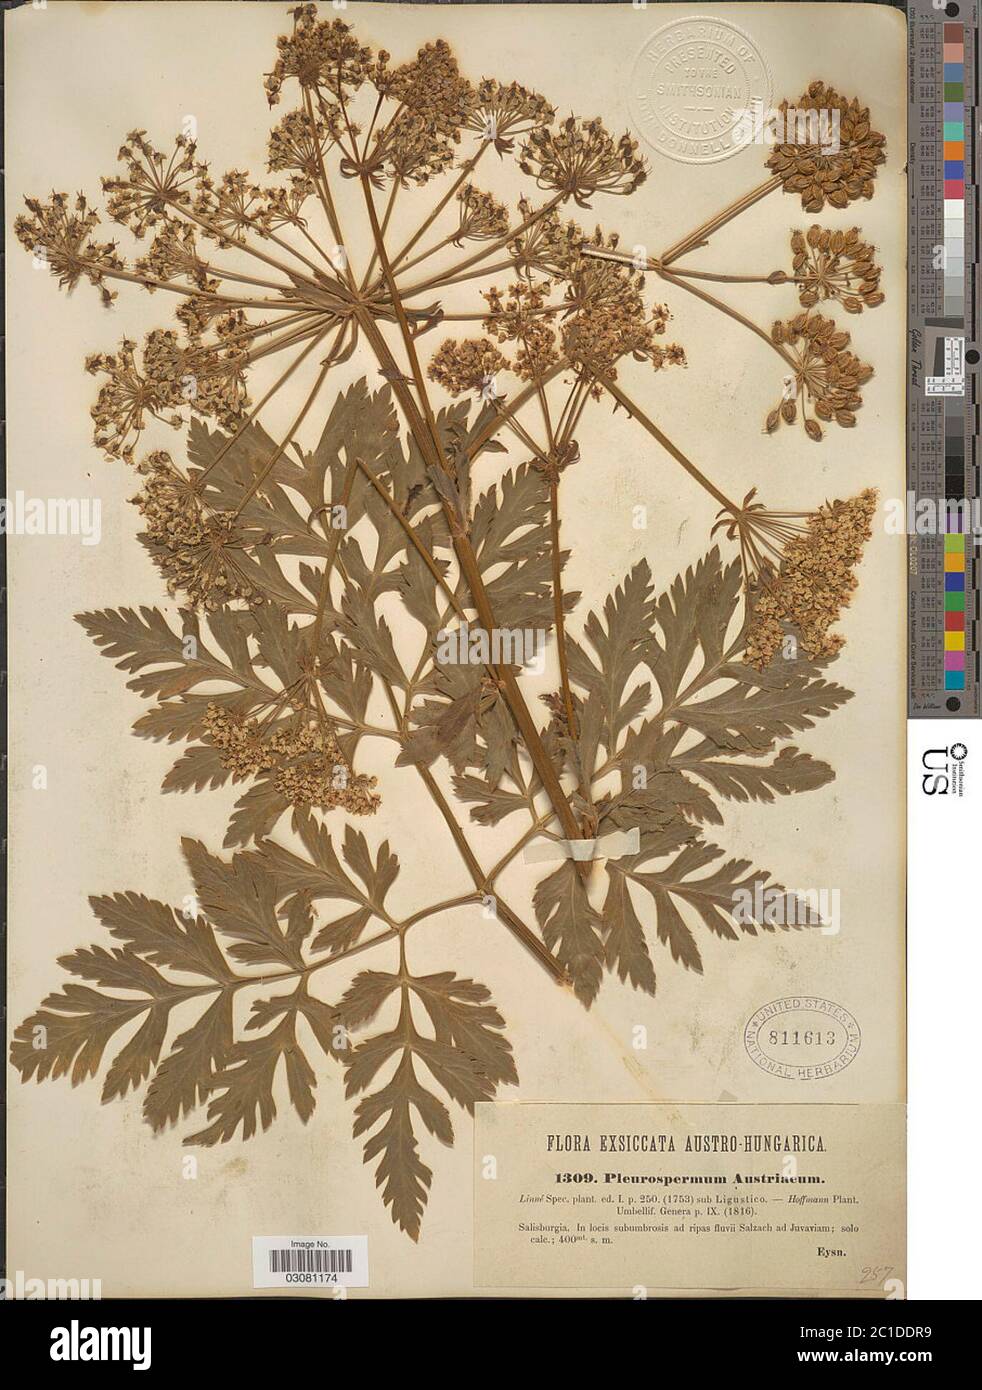 Pleurospermum austriacum L Hoffm Pleurospermum austriacum L Hoffm. Stock Photo